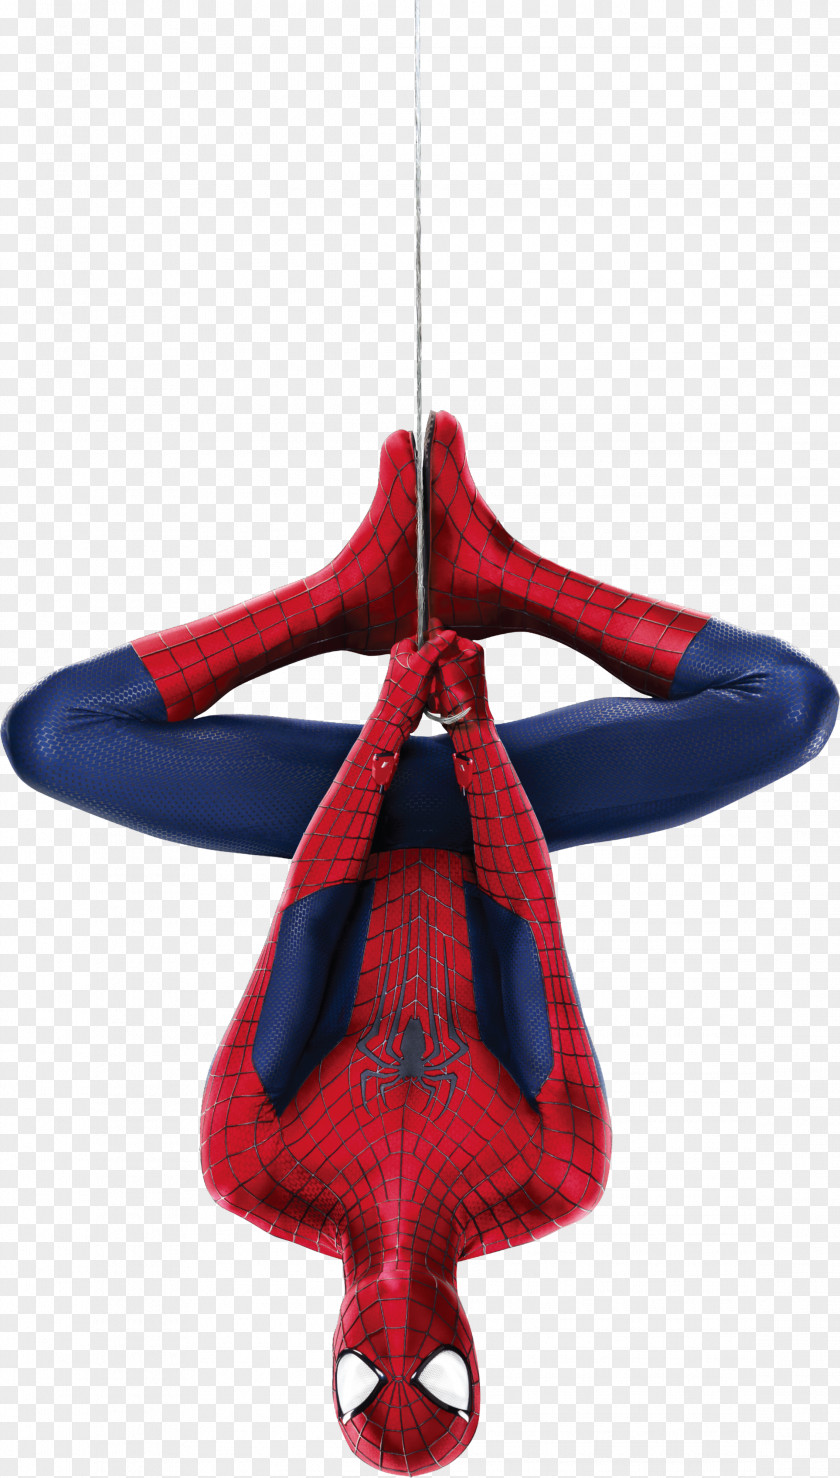 Iron Spiderman Spider-Man Wall Decal Sticker Superhero Marvel Comics PNG